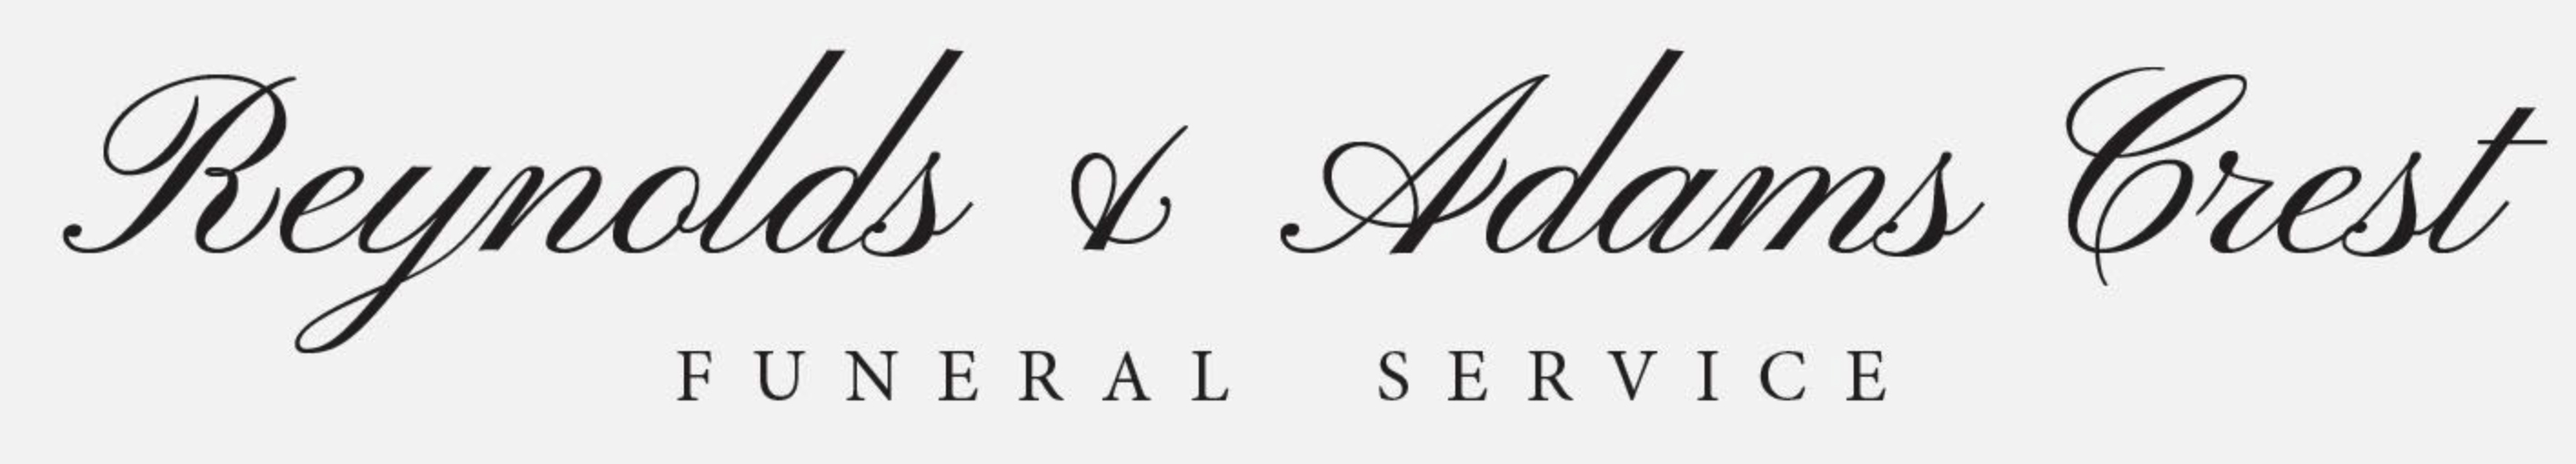 Reynolds & AdamsCrest Funeral Service company logo